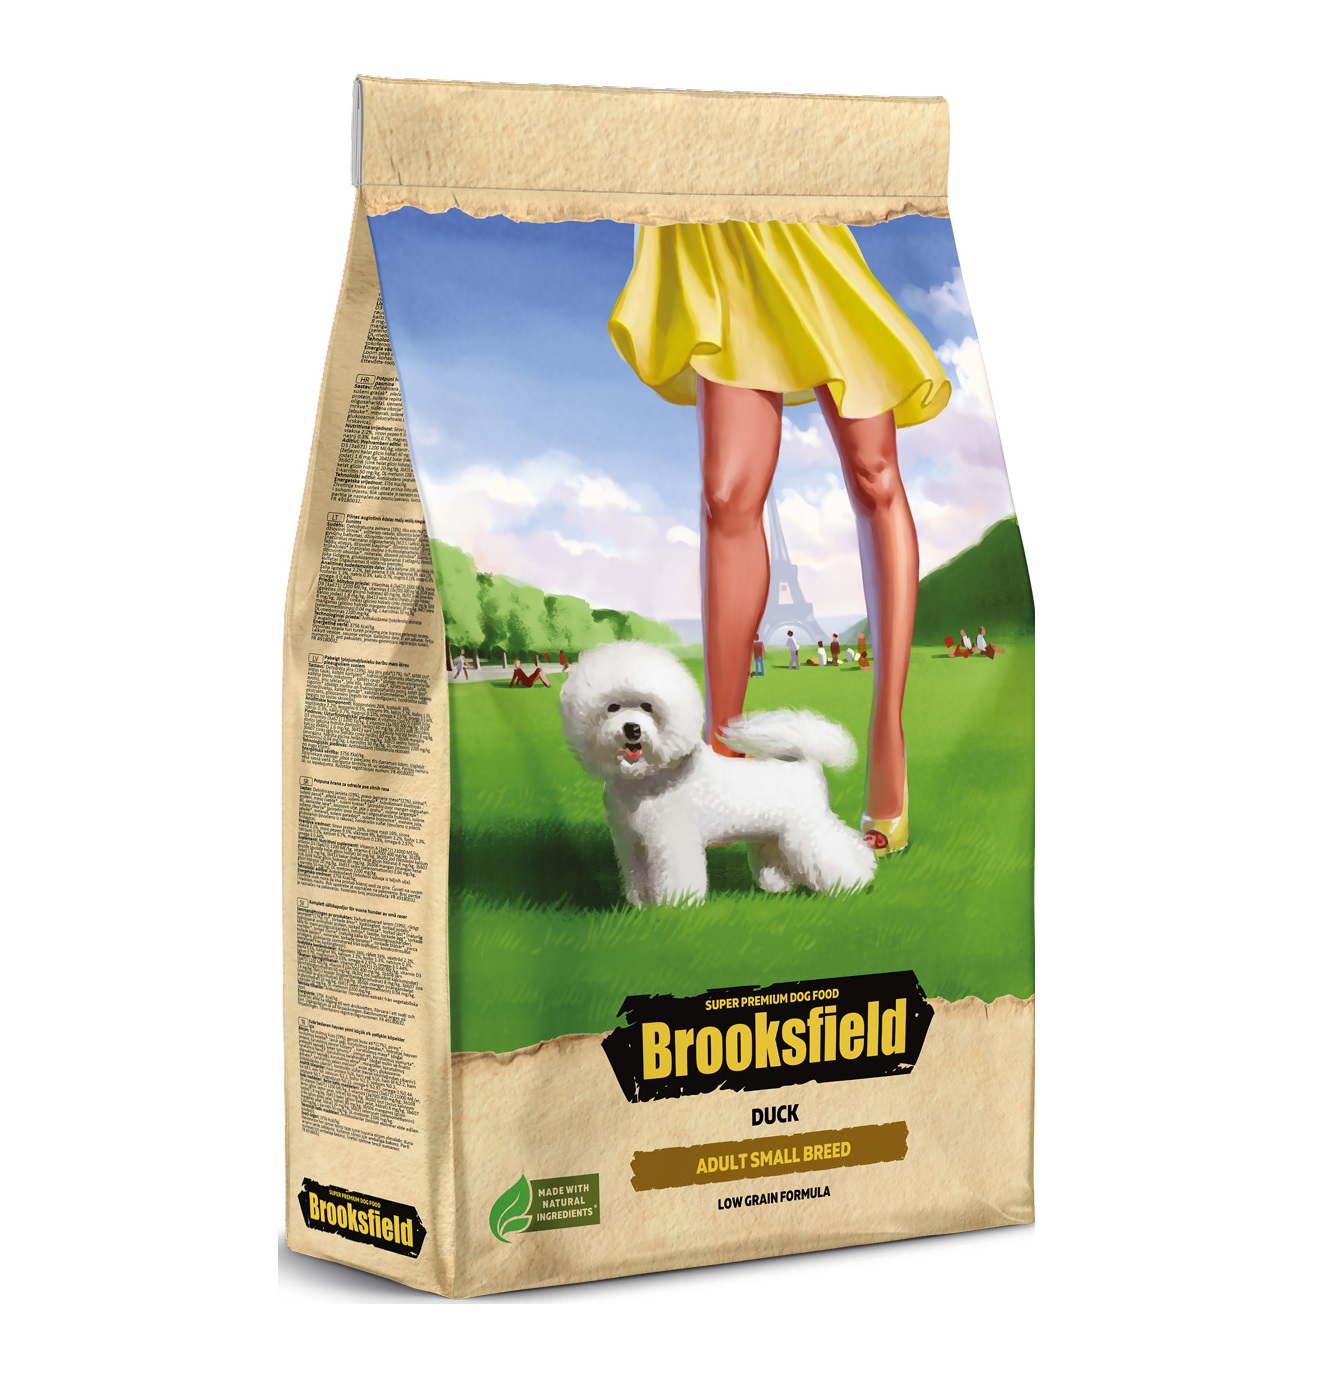 Бруксфилд 10кг - Утка - для Мелких собак (Brooksfield)